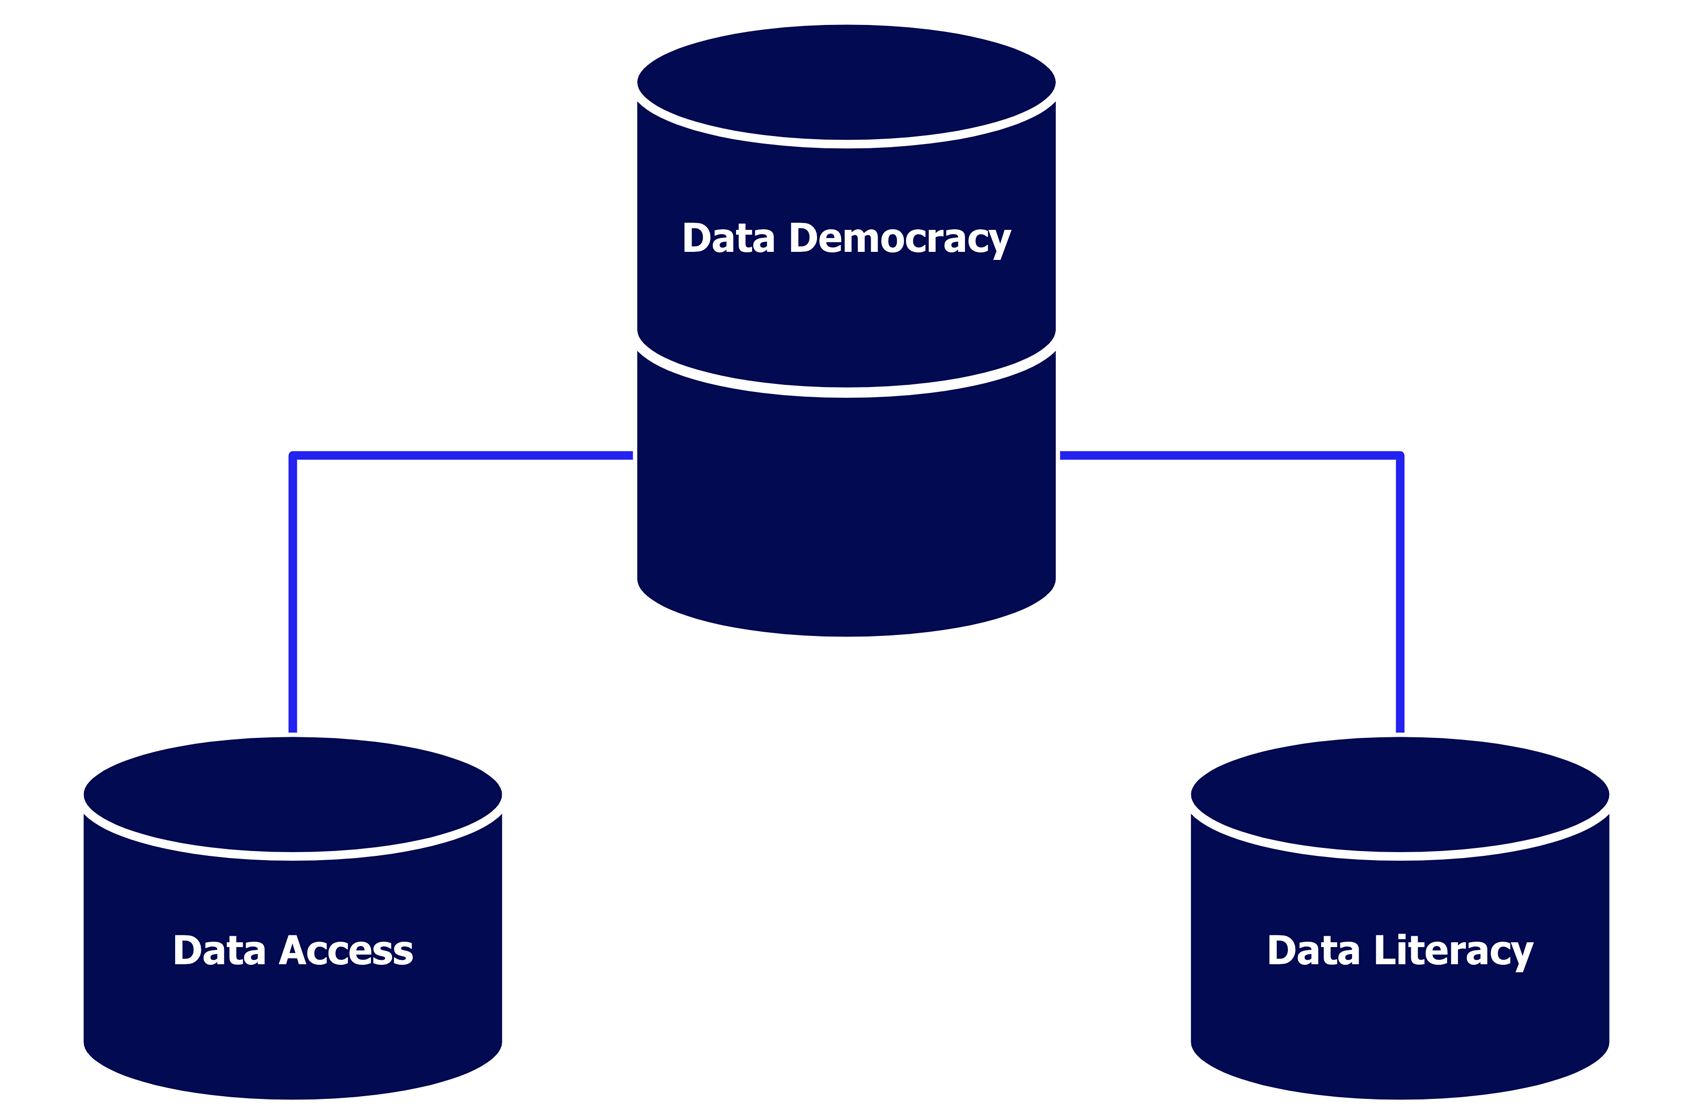 Data democratization